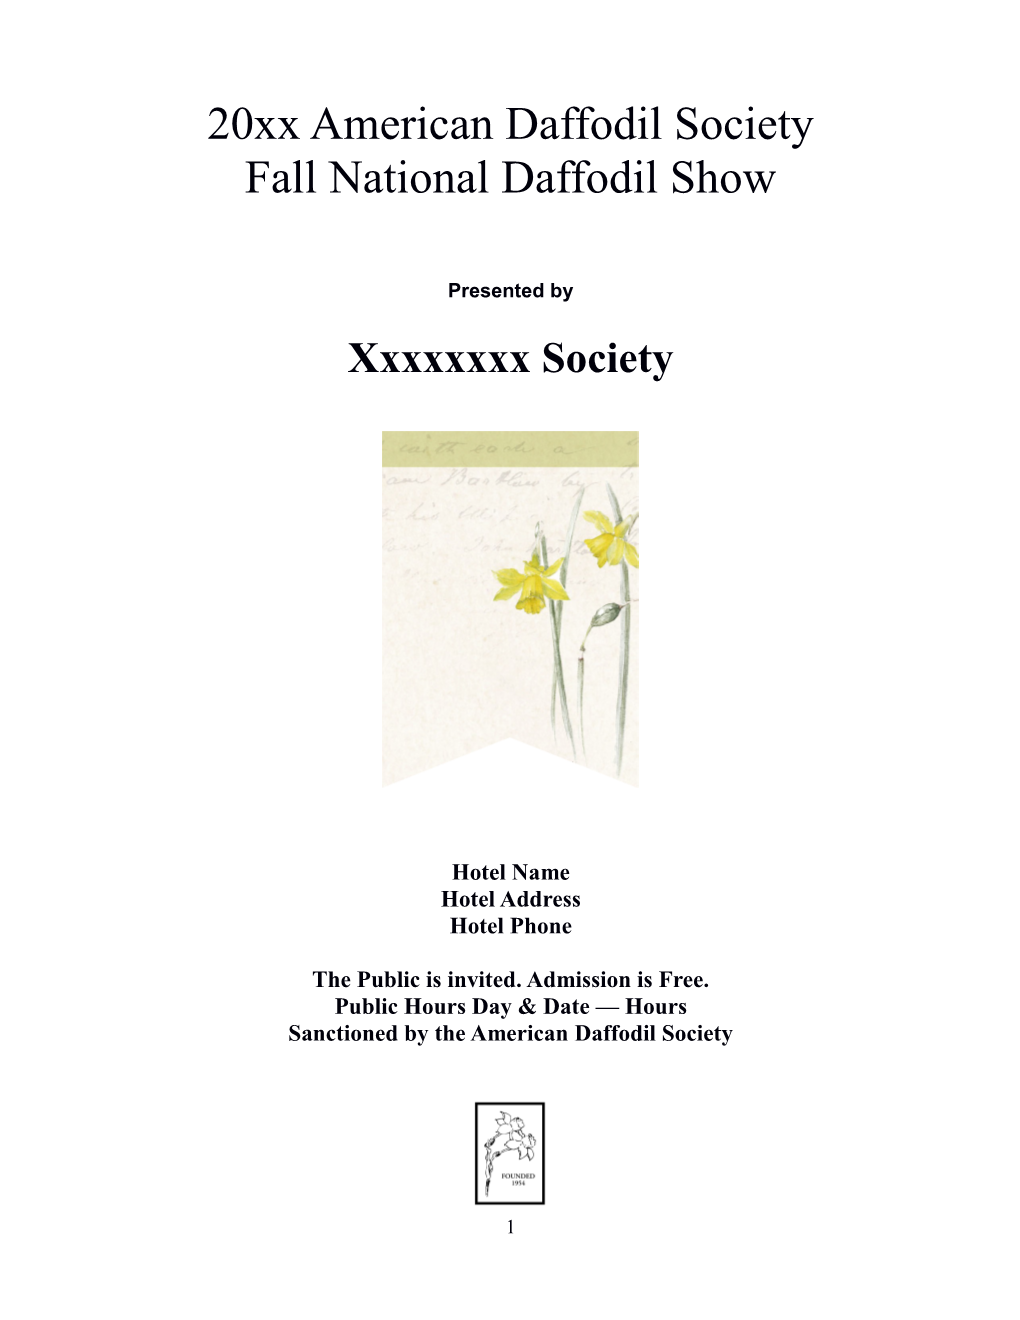 Fall National Daffodil Show